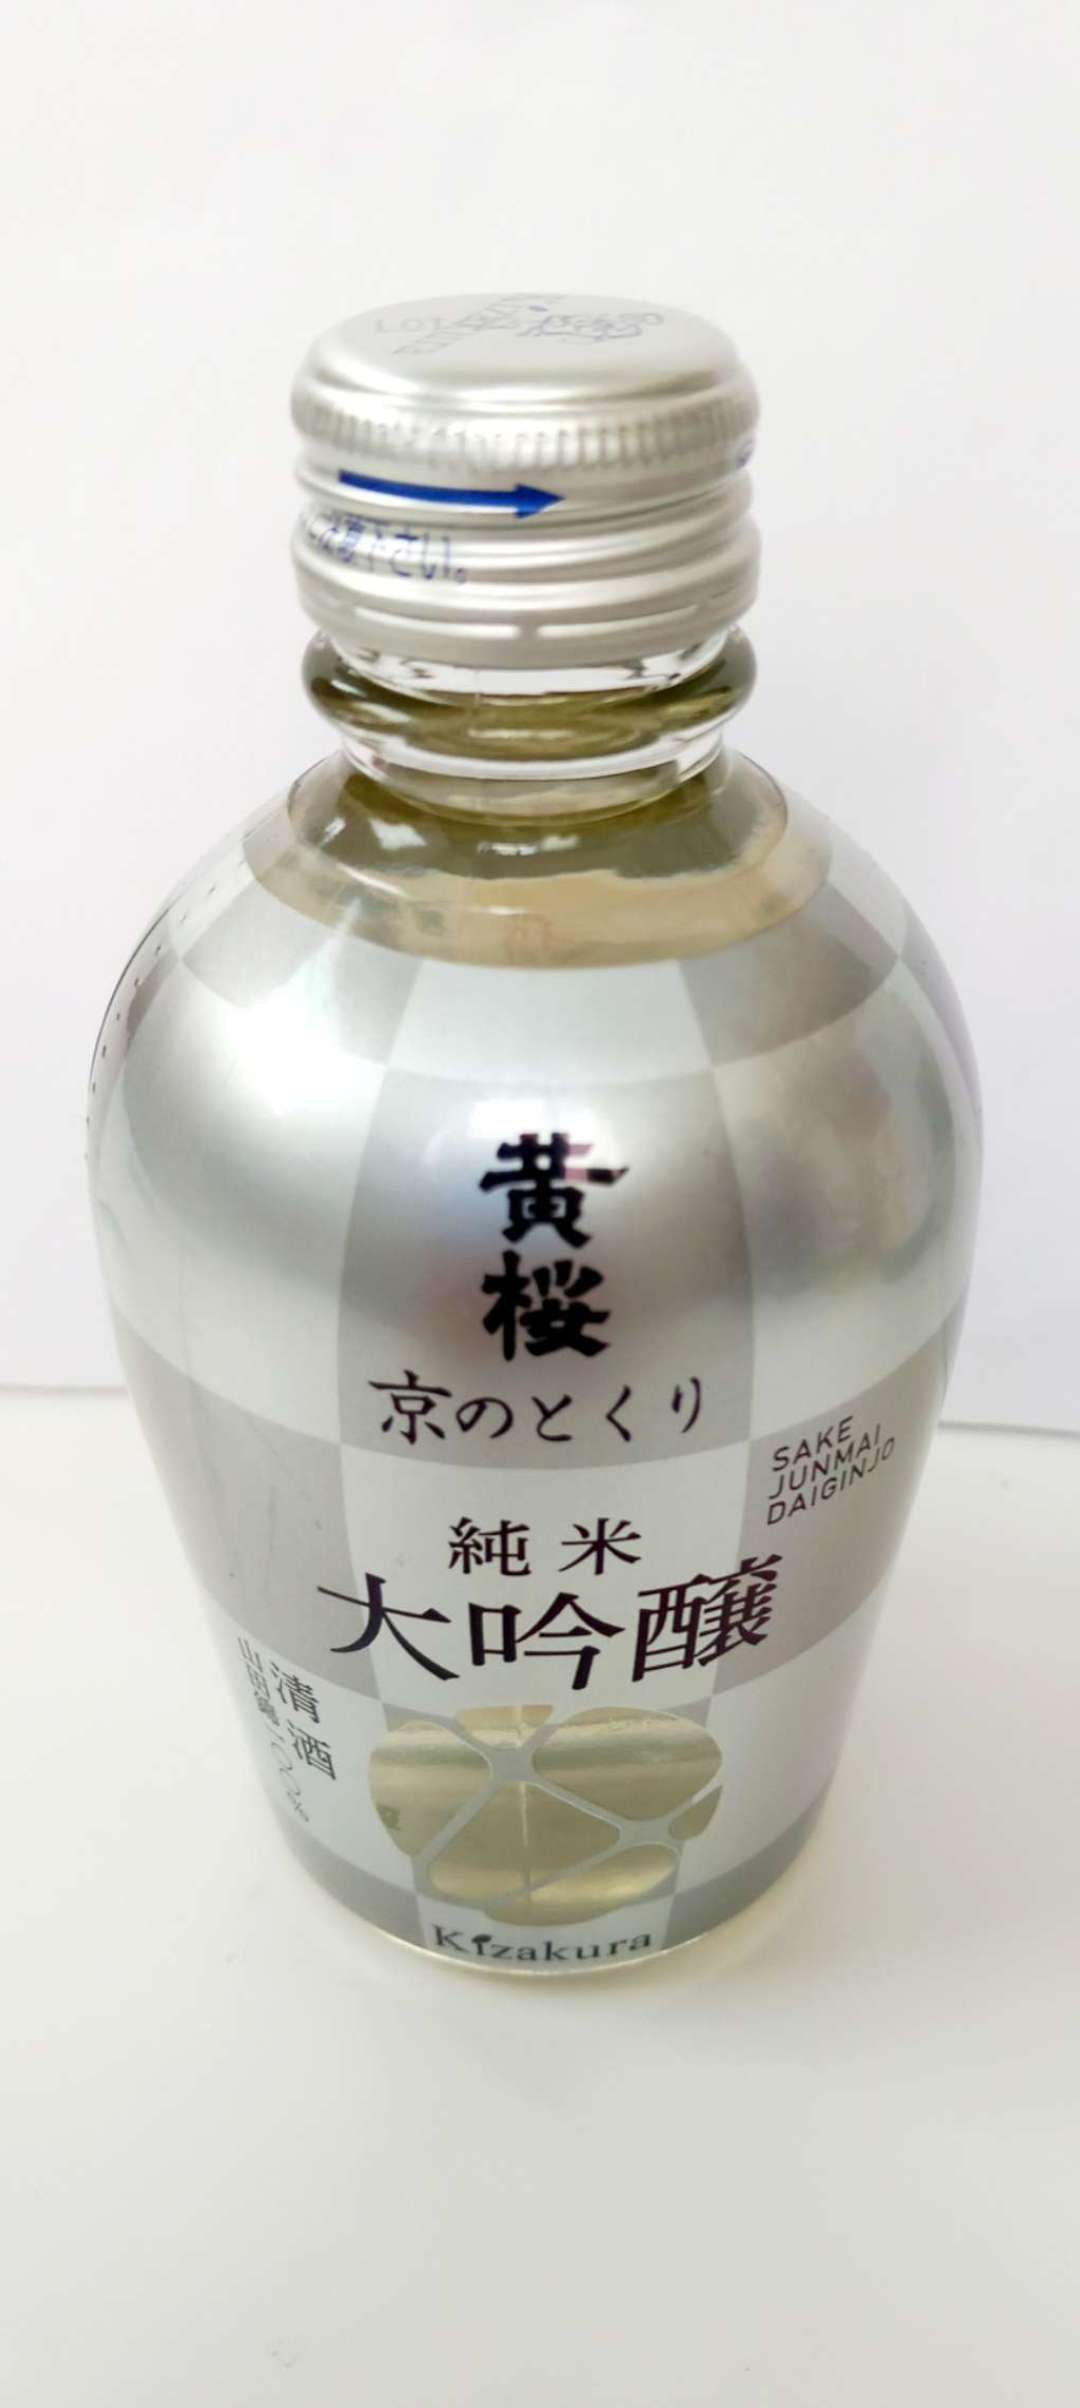 Kizakura Sake Silver 16%Vol 180ml